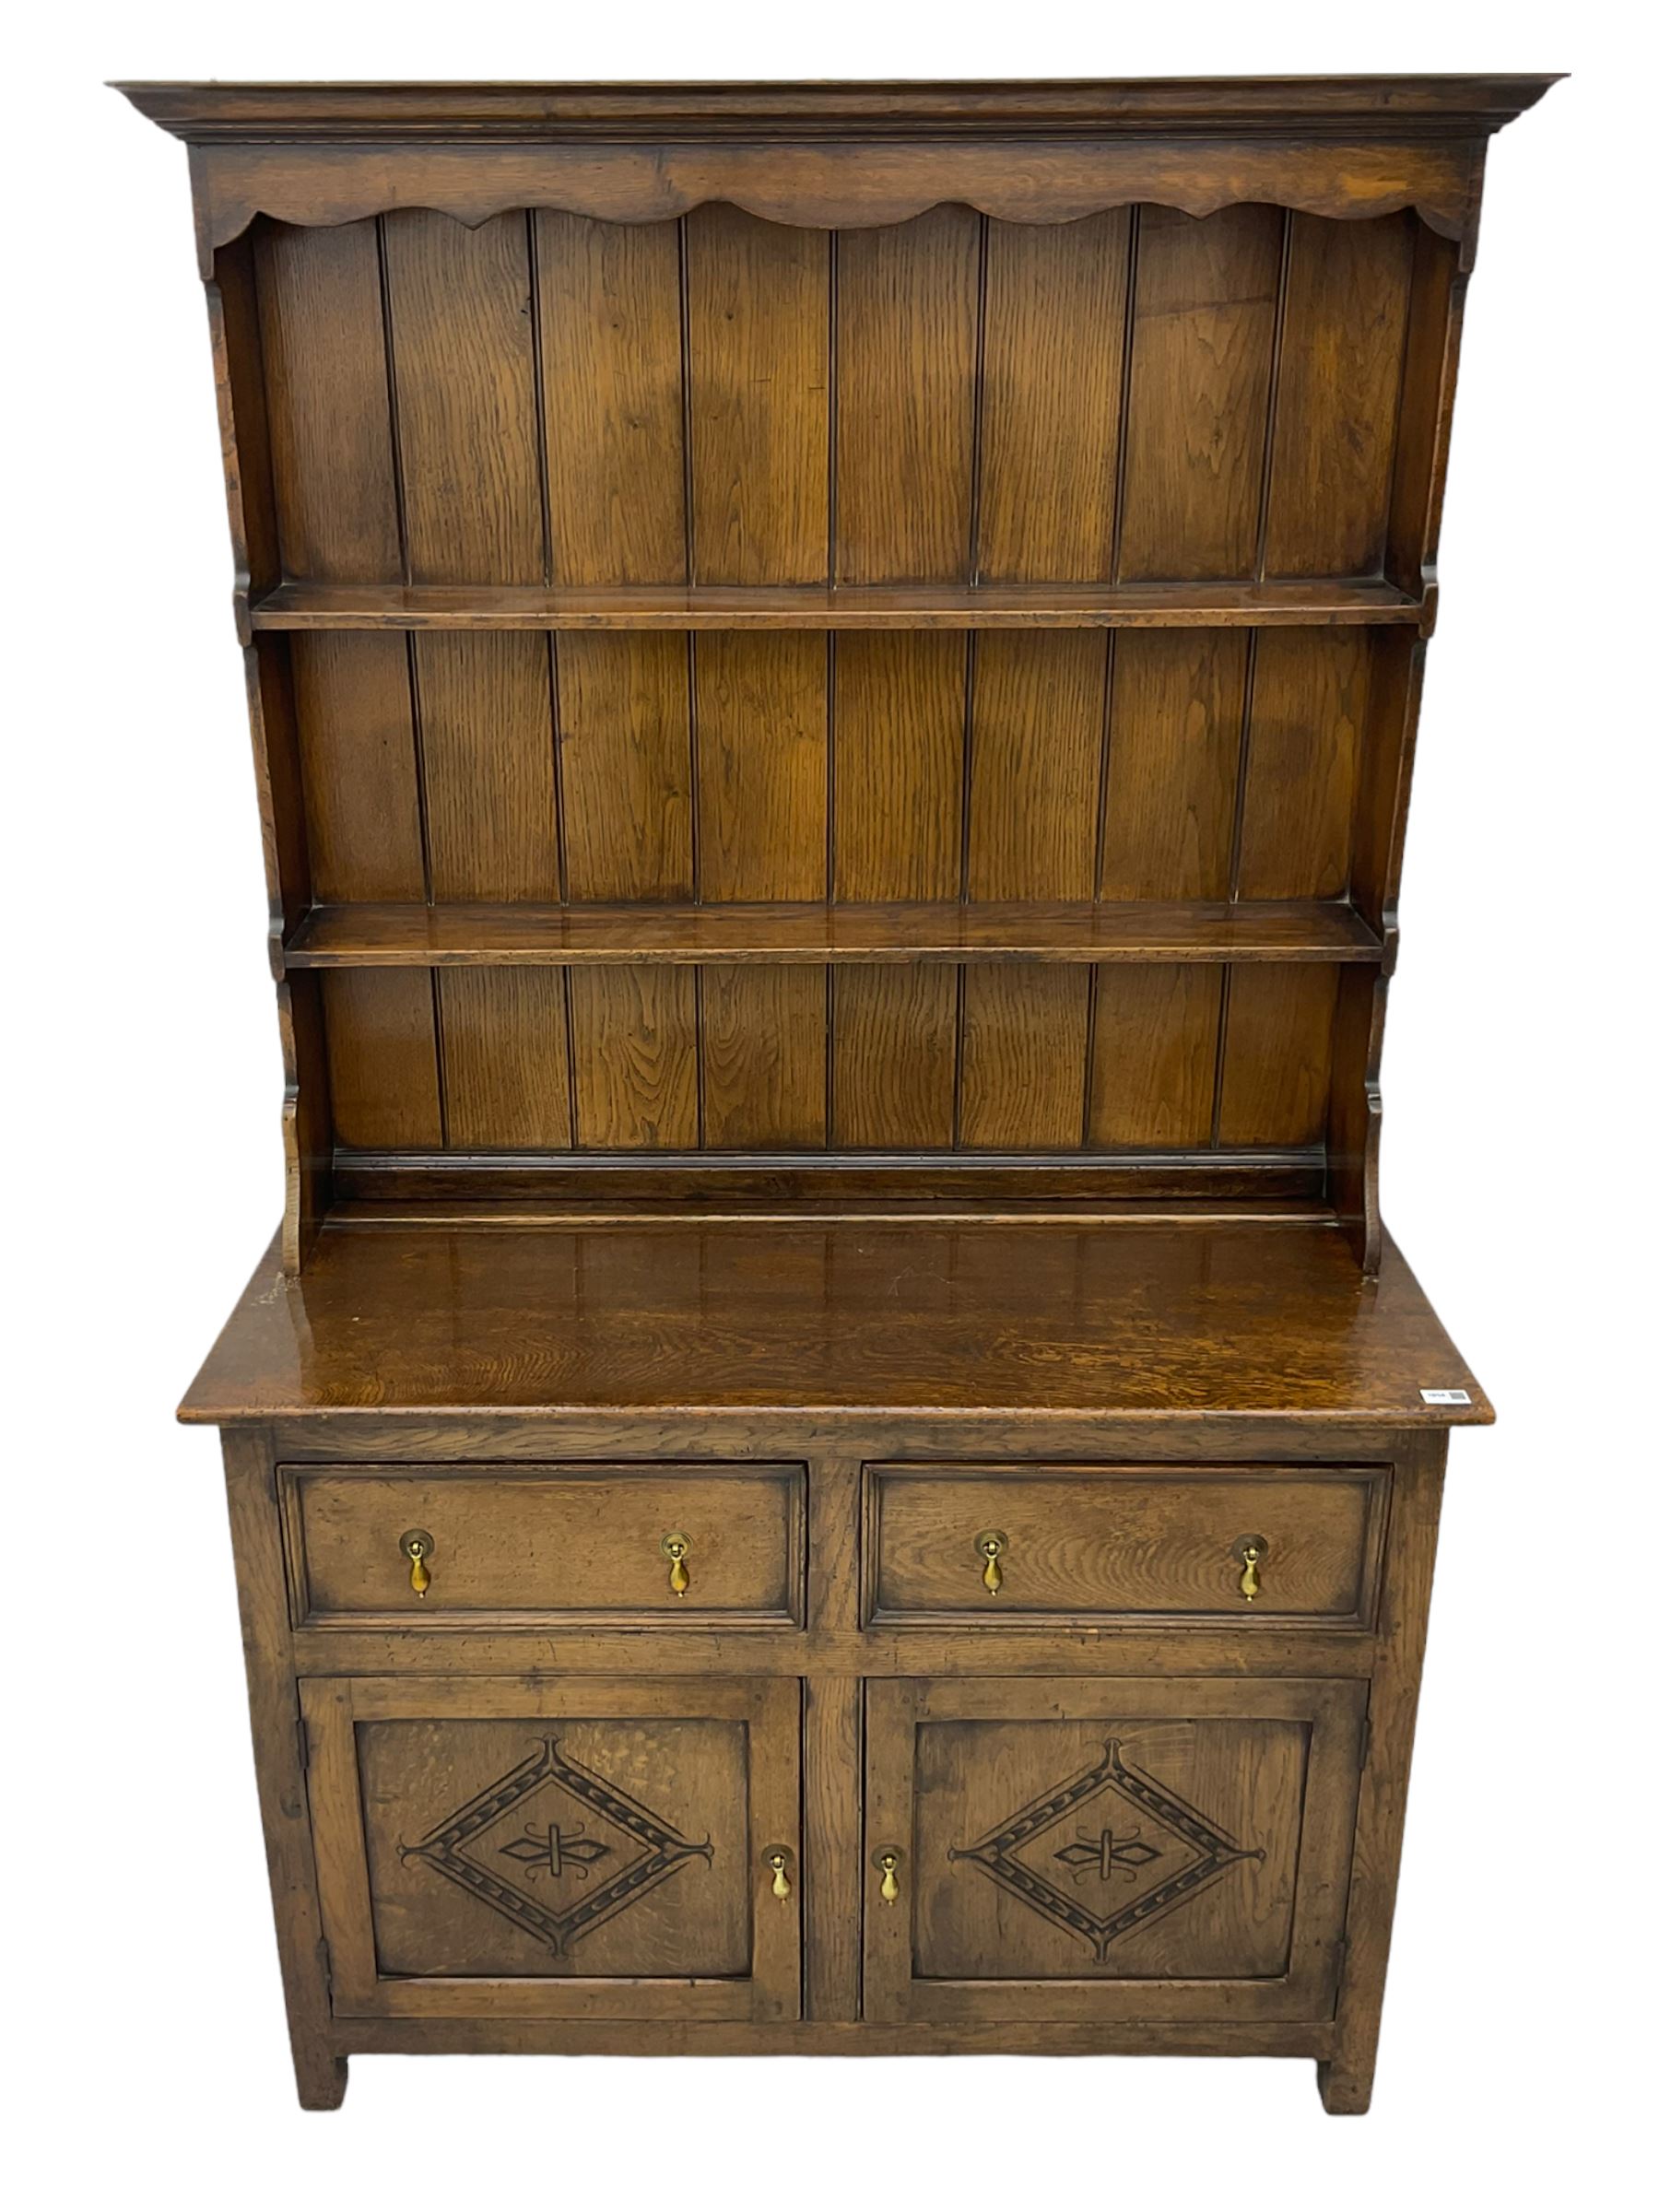 Georgian style oak dresser and rack - Image 3 of 7